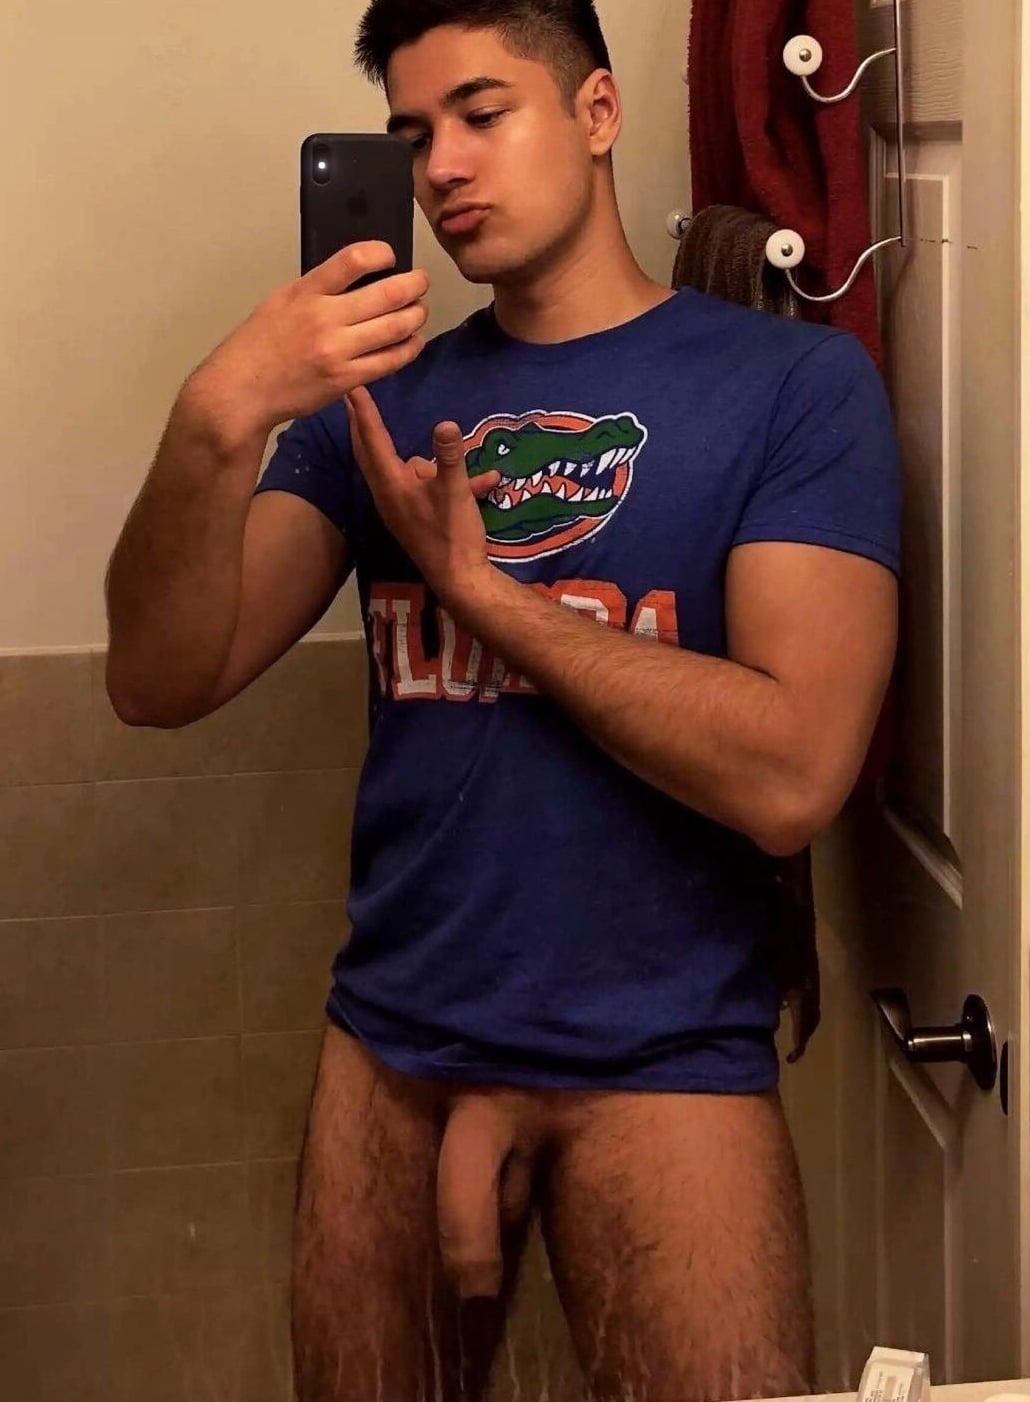 Smooth Soft Dick Porn - Latino boy with a big soft cock - Nude Latino Boys